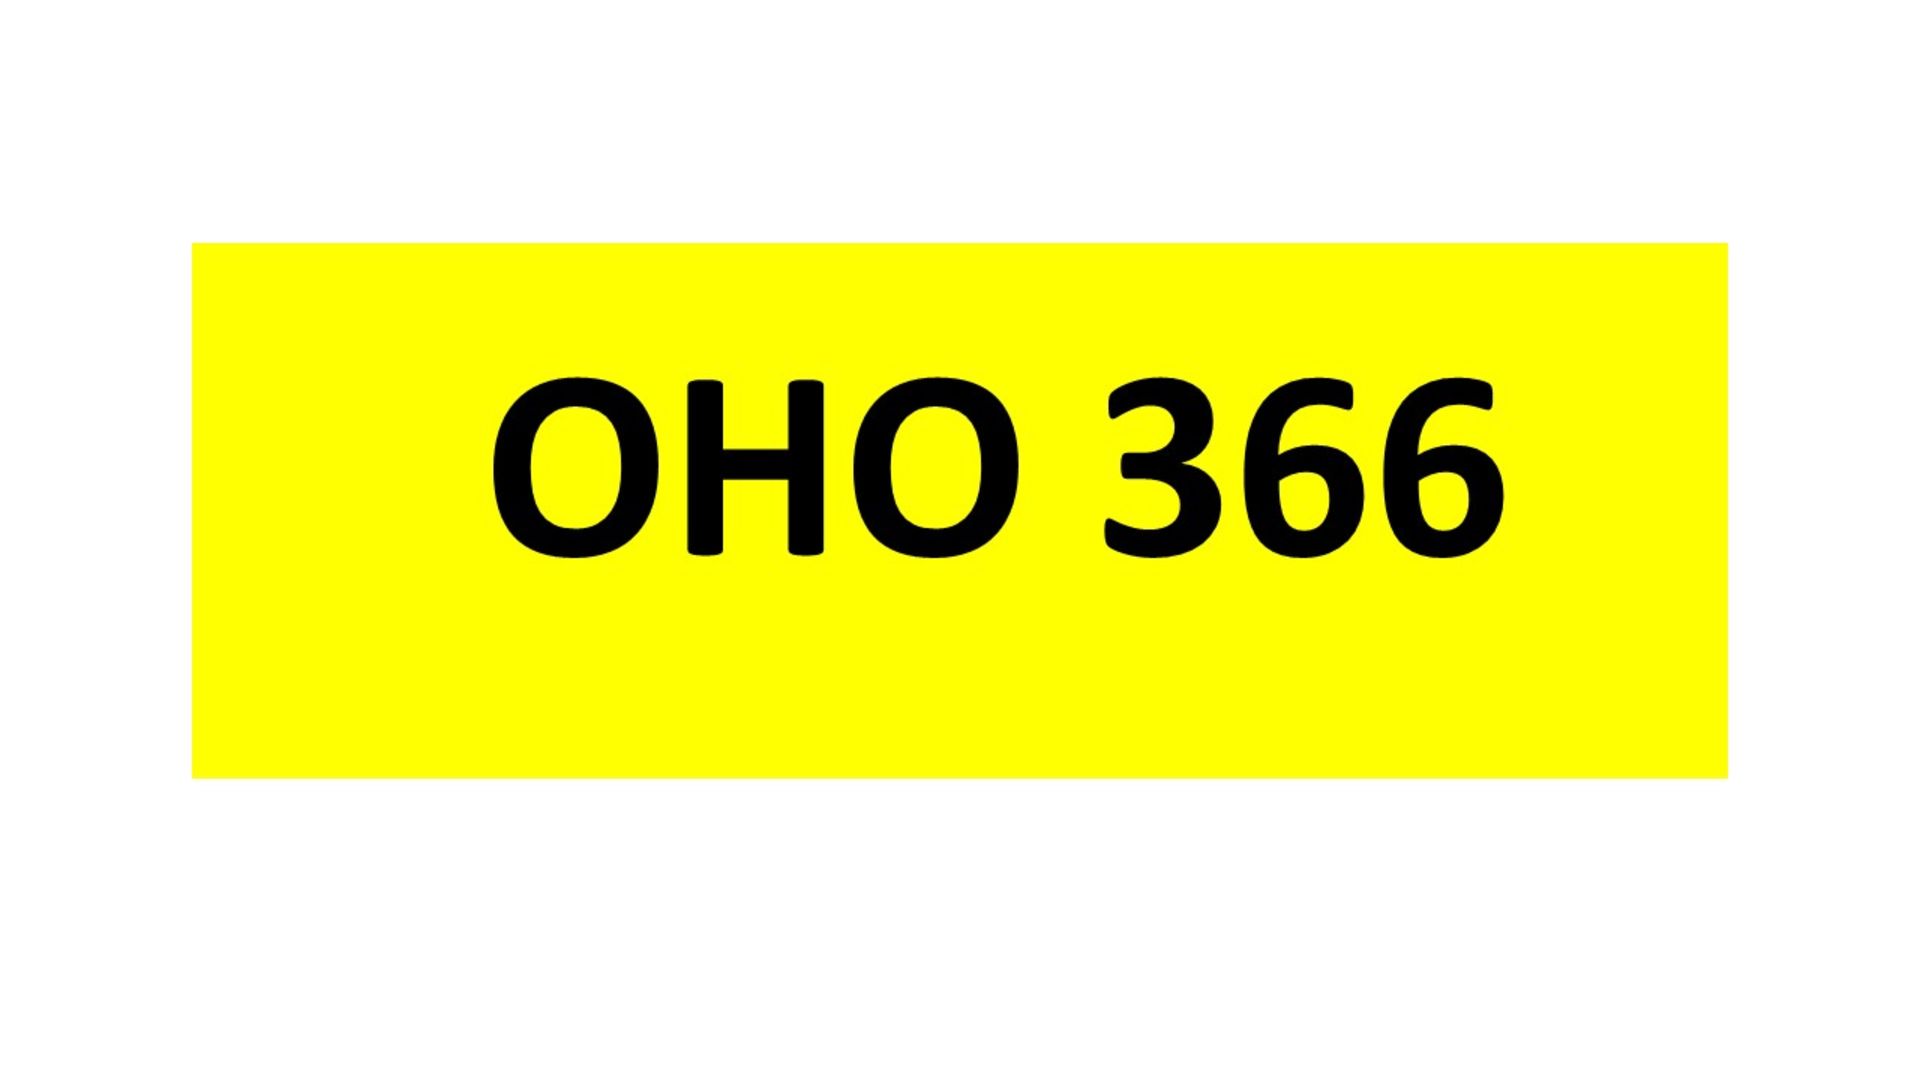 Registration - OHO 366